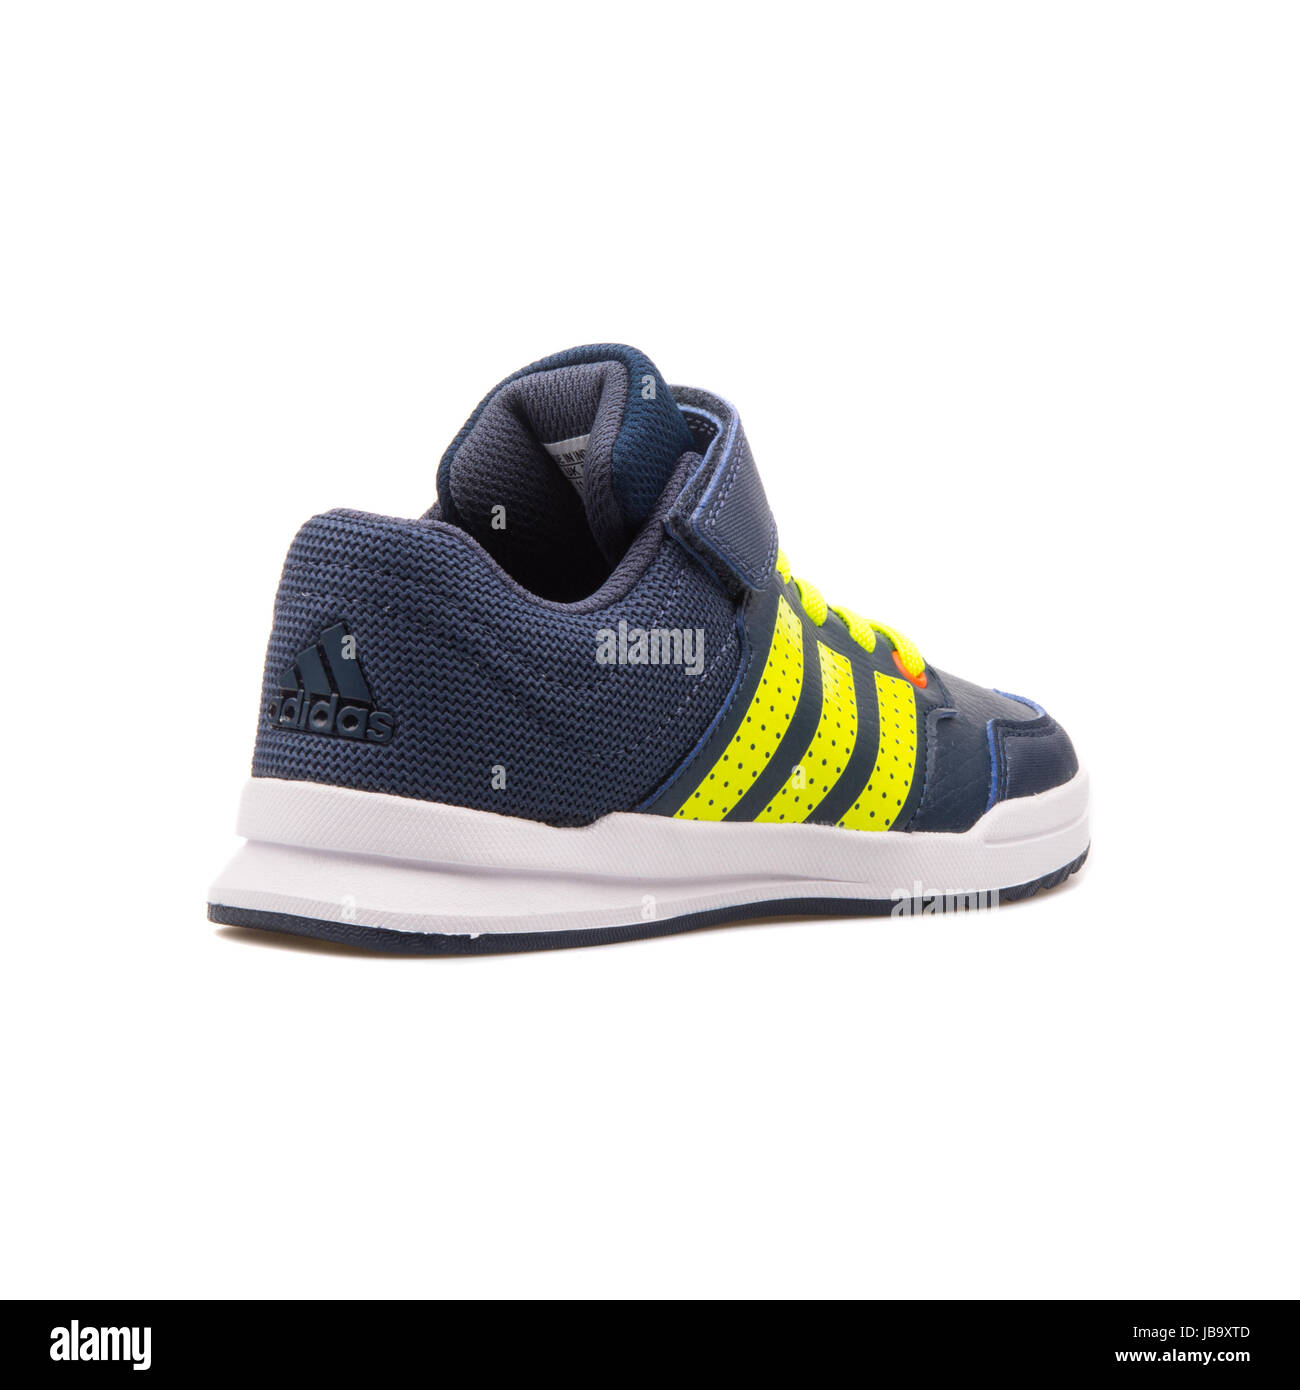 Adidas Jan BS 2 C Bleu foncé et jaune Kids chaussures running - B23902  Photo Stock - Alamy